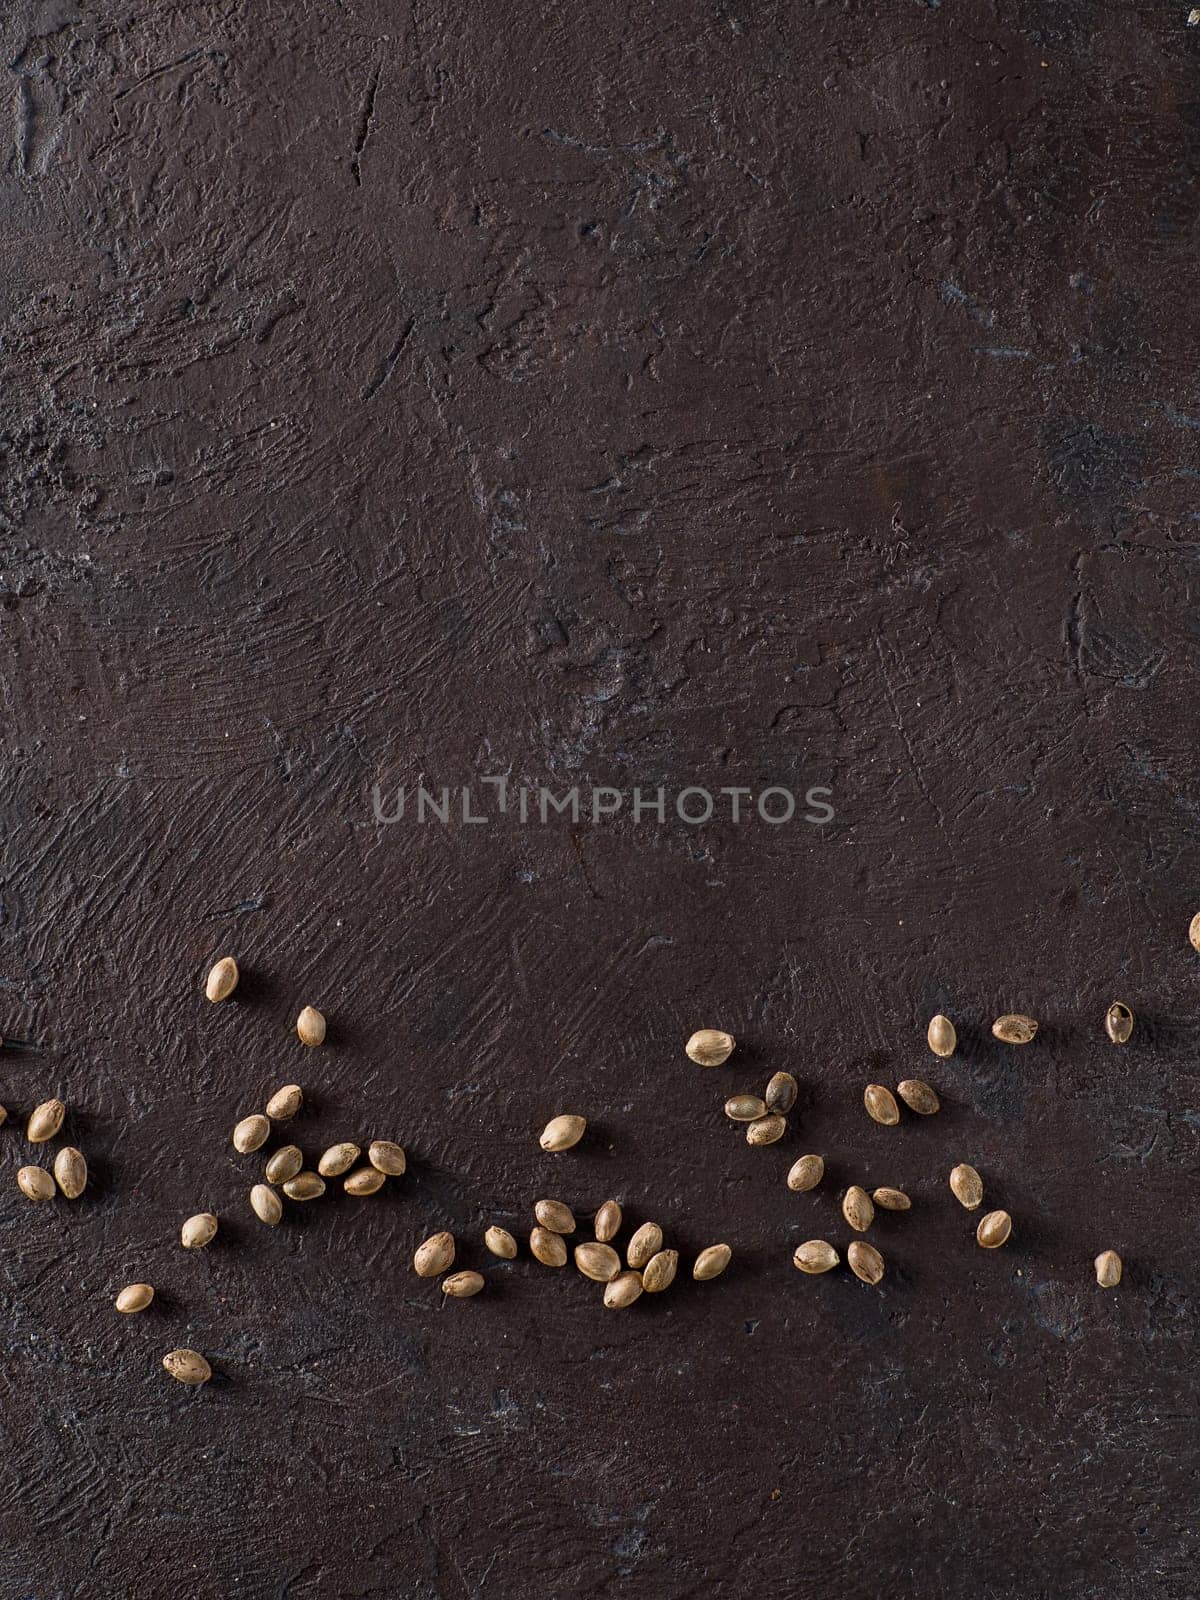 Hemp seeds on black top view, copy space by fascinadora